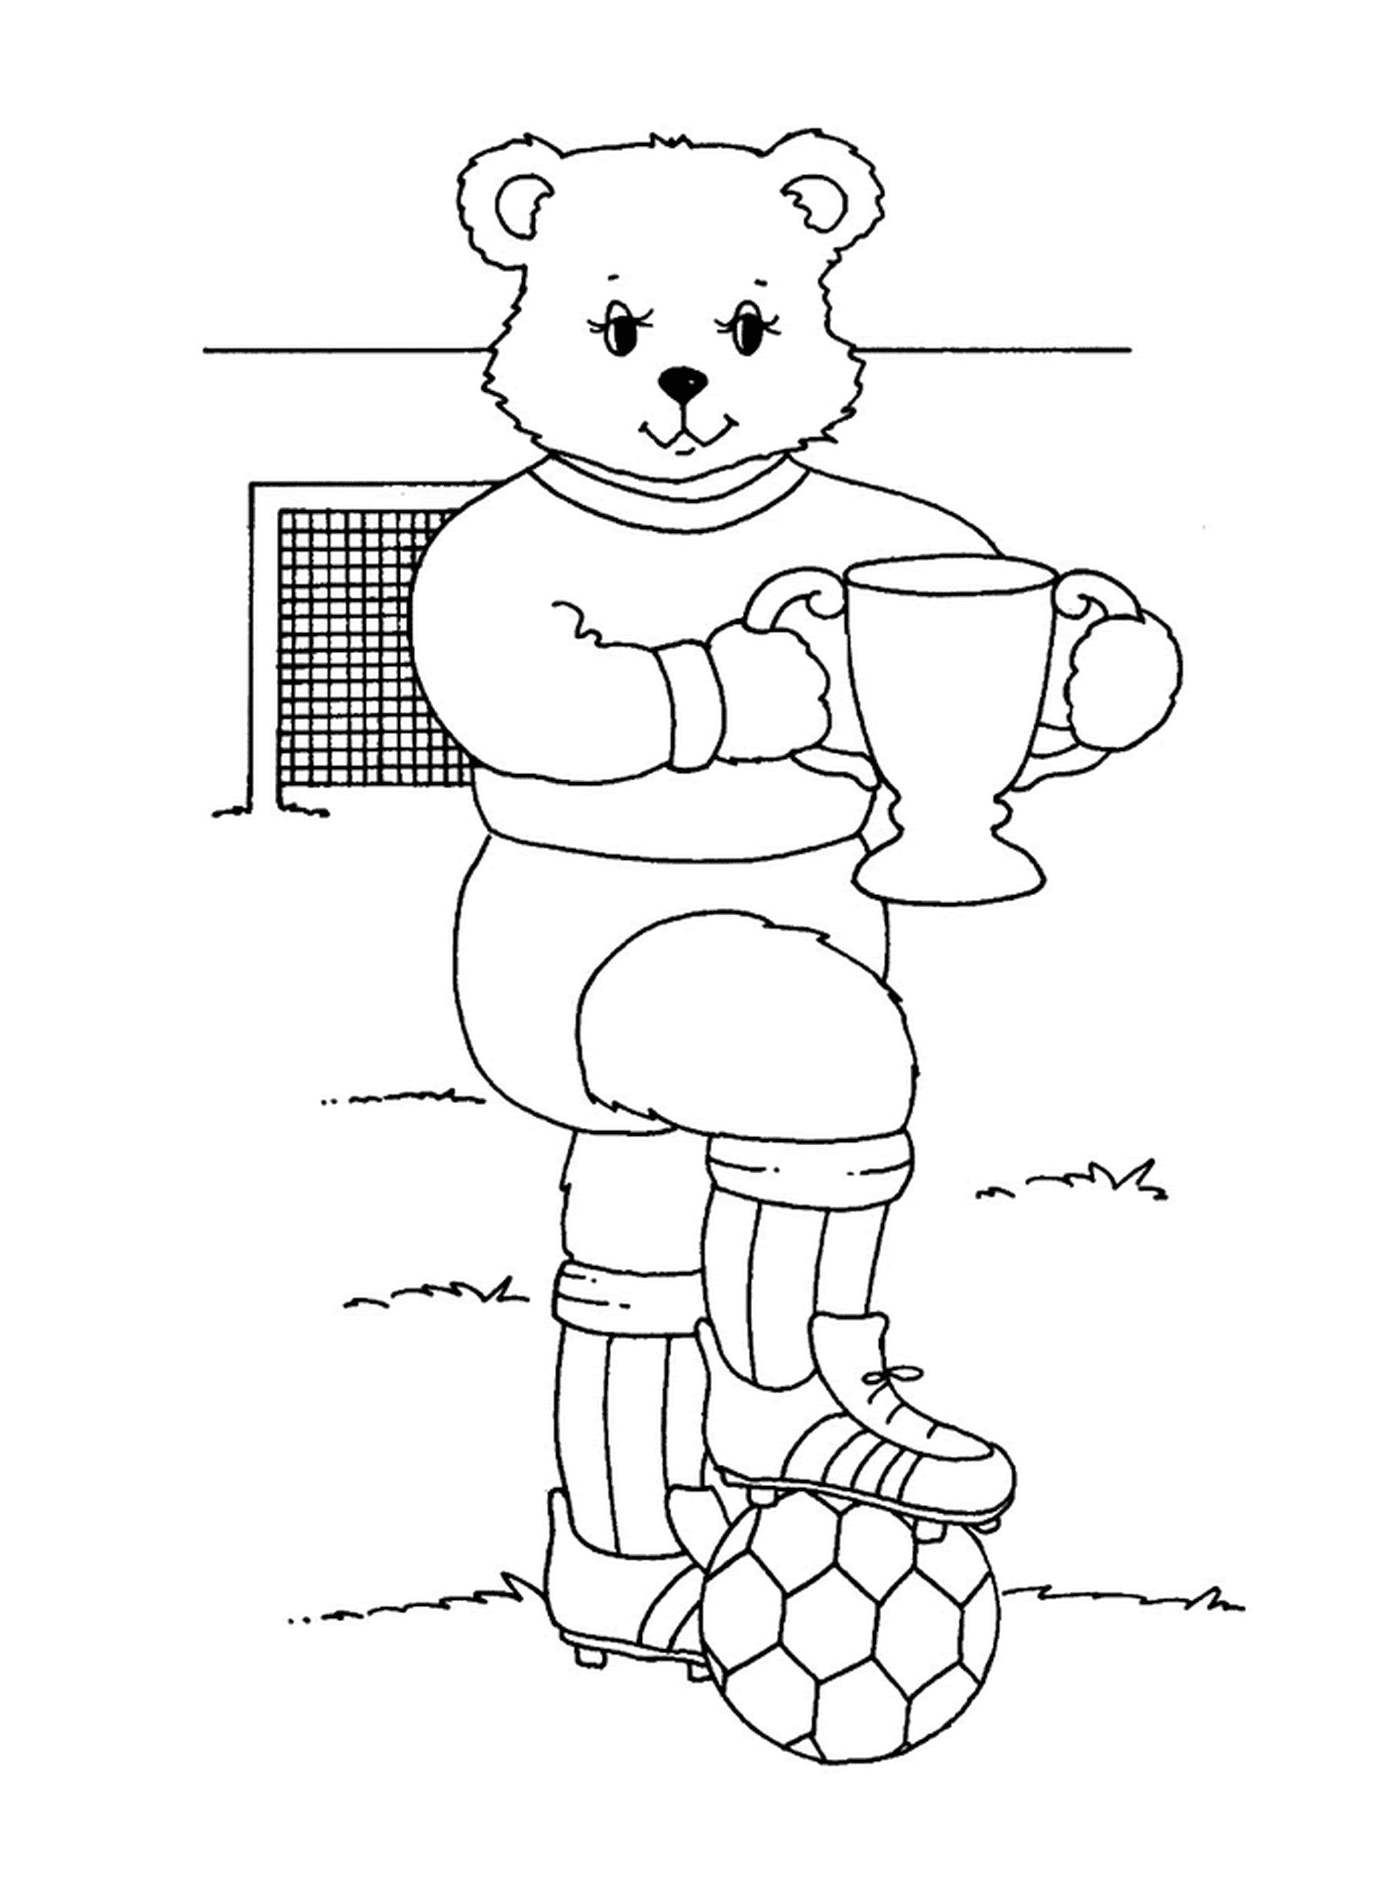  A bear playing football 